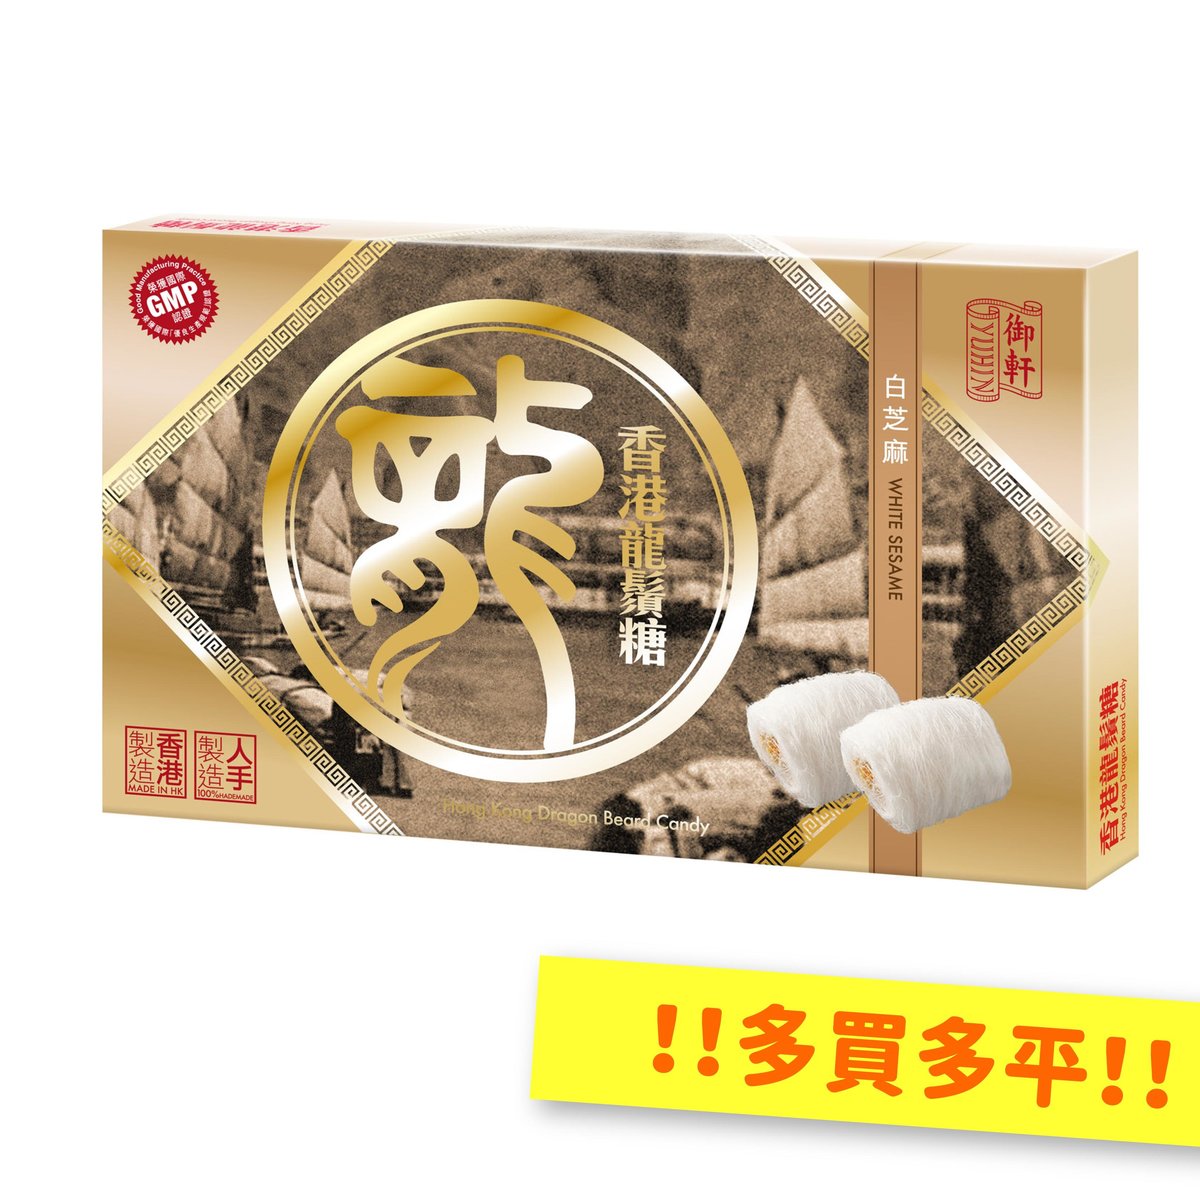 Yuhin Yuhin White Sesame 12 Pcs Dragon Beard Candy Giftbox Hktvmall Online Shopping